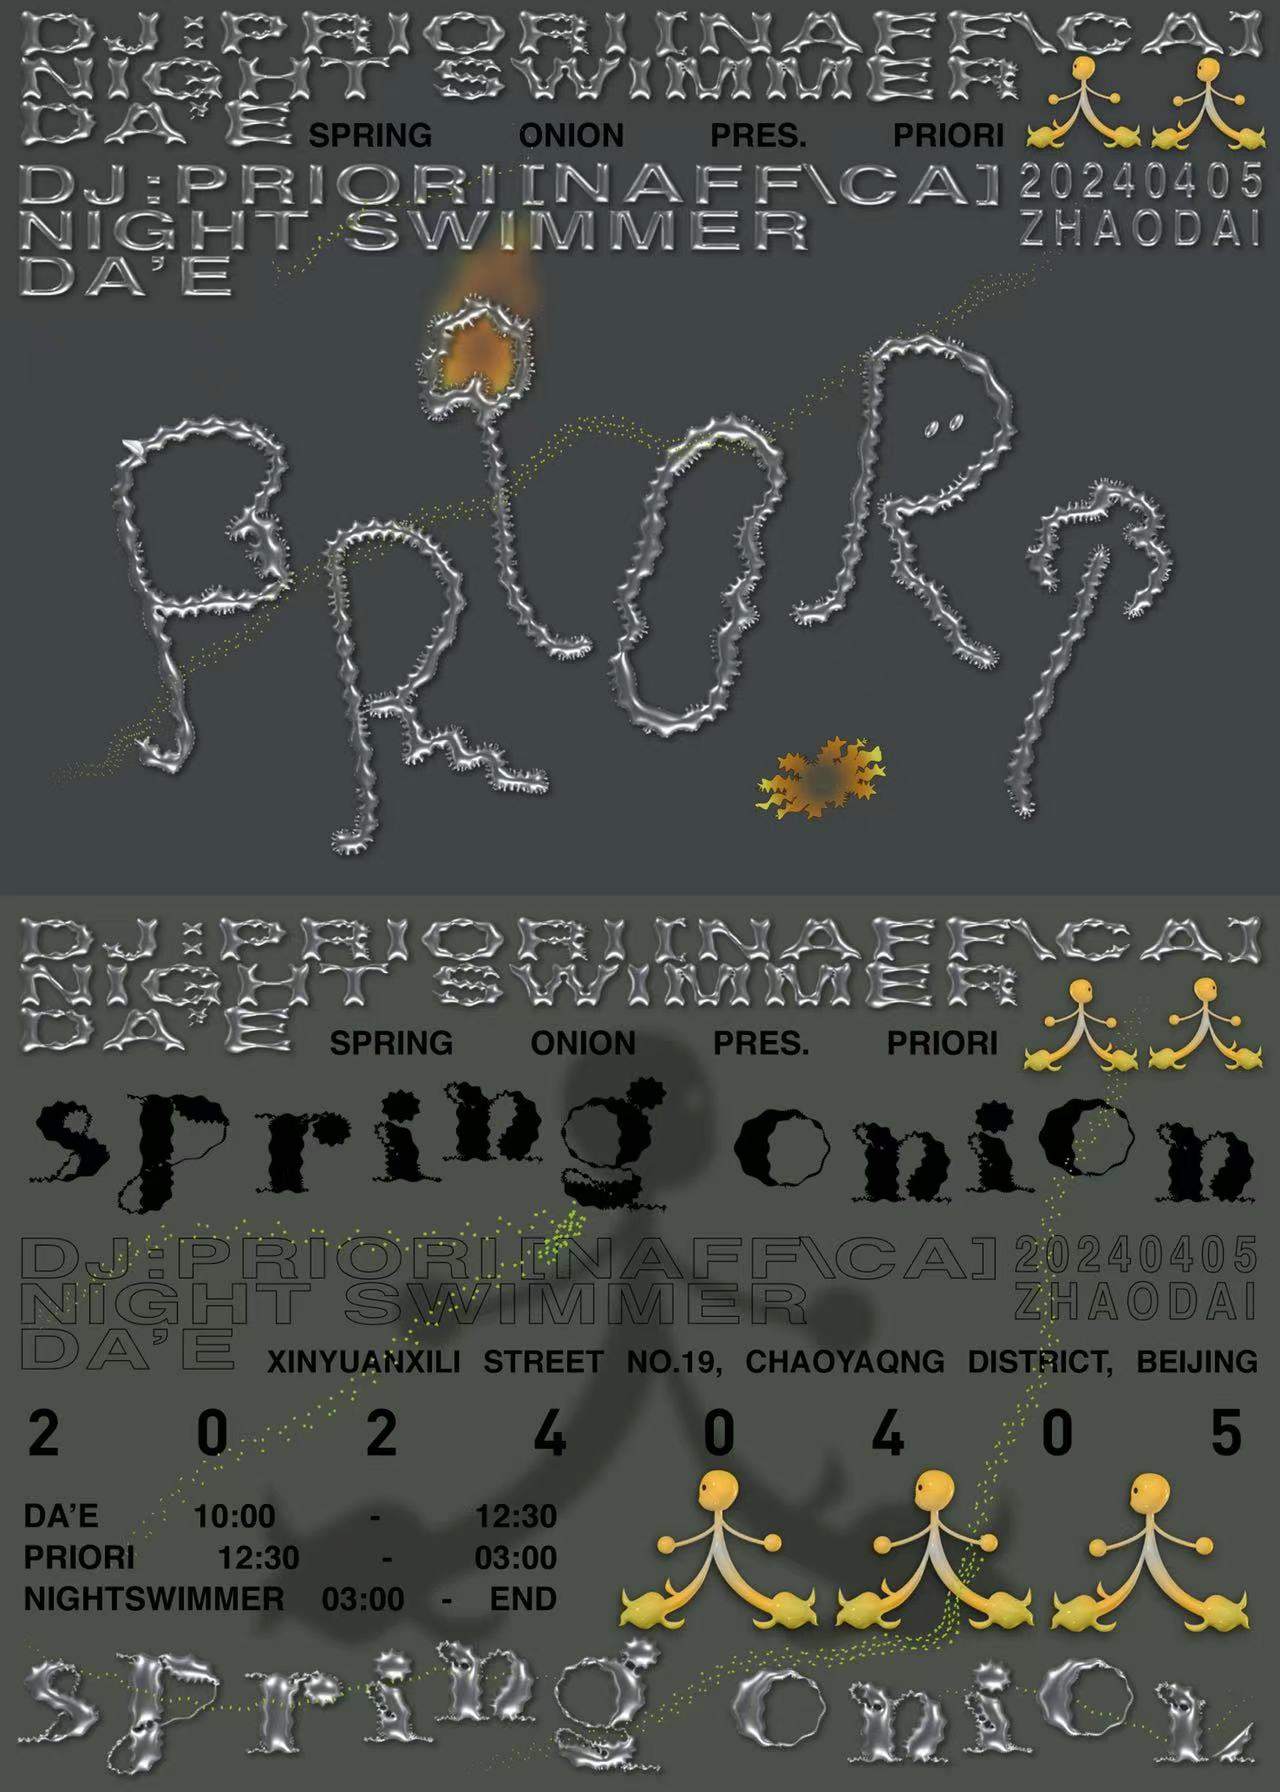 Spring Onion 葱花 pres. Priori - フライヤー表